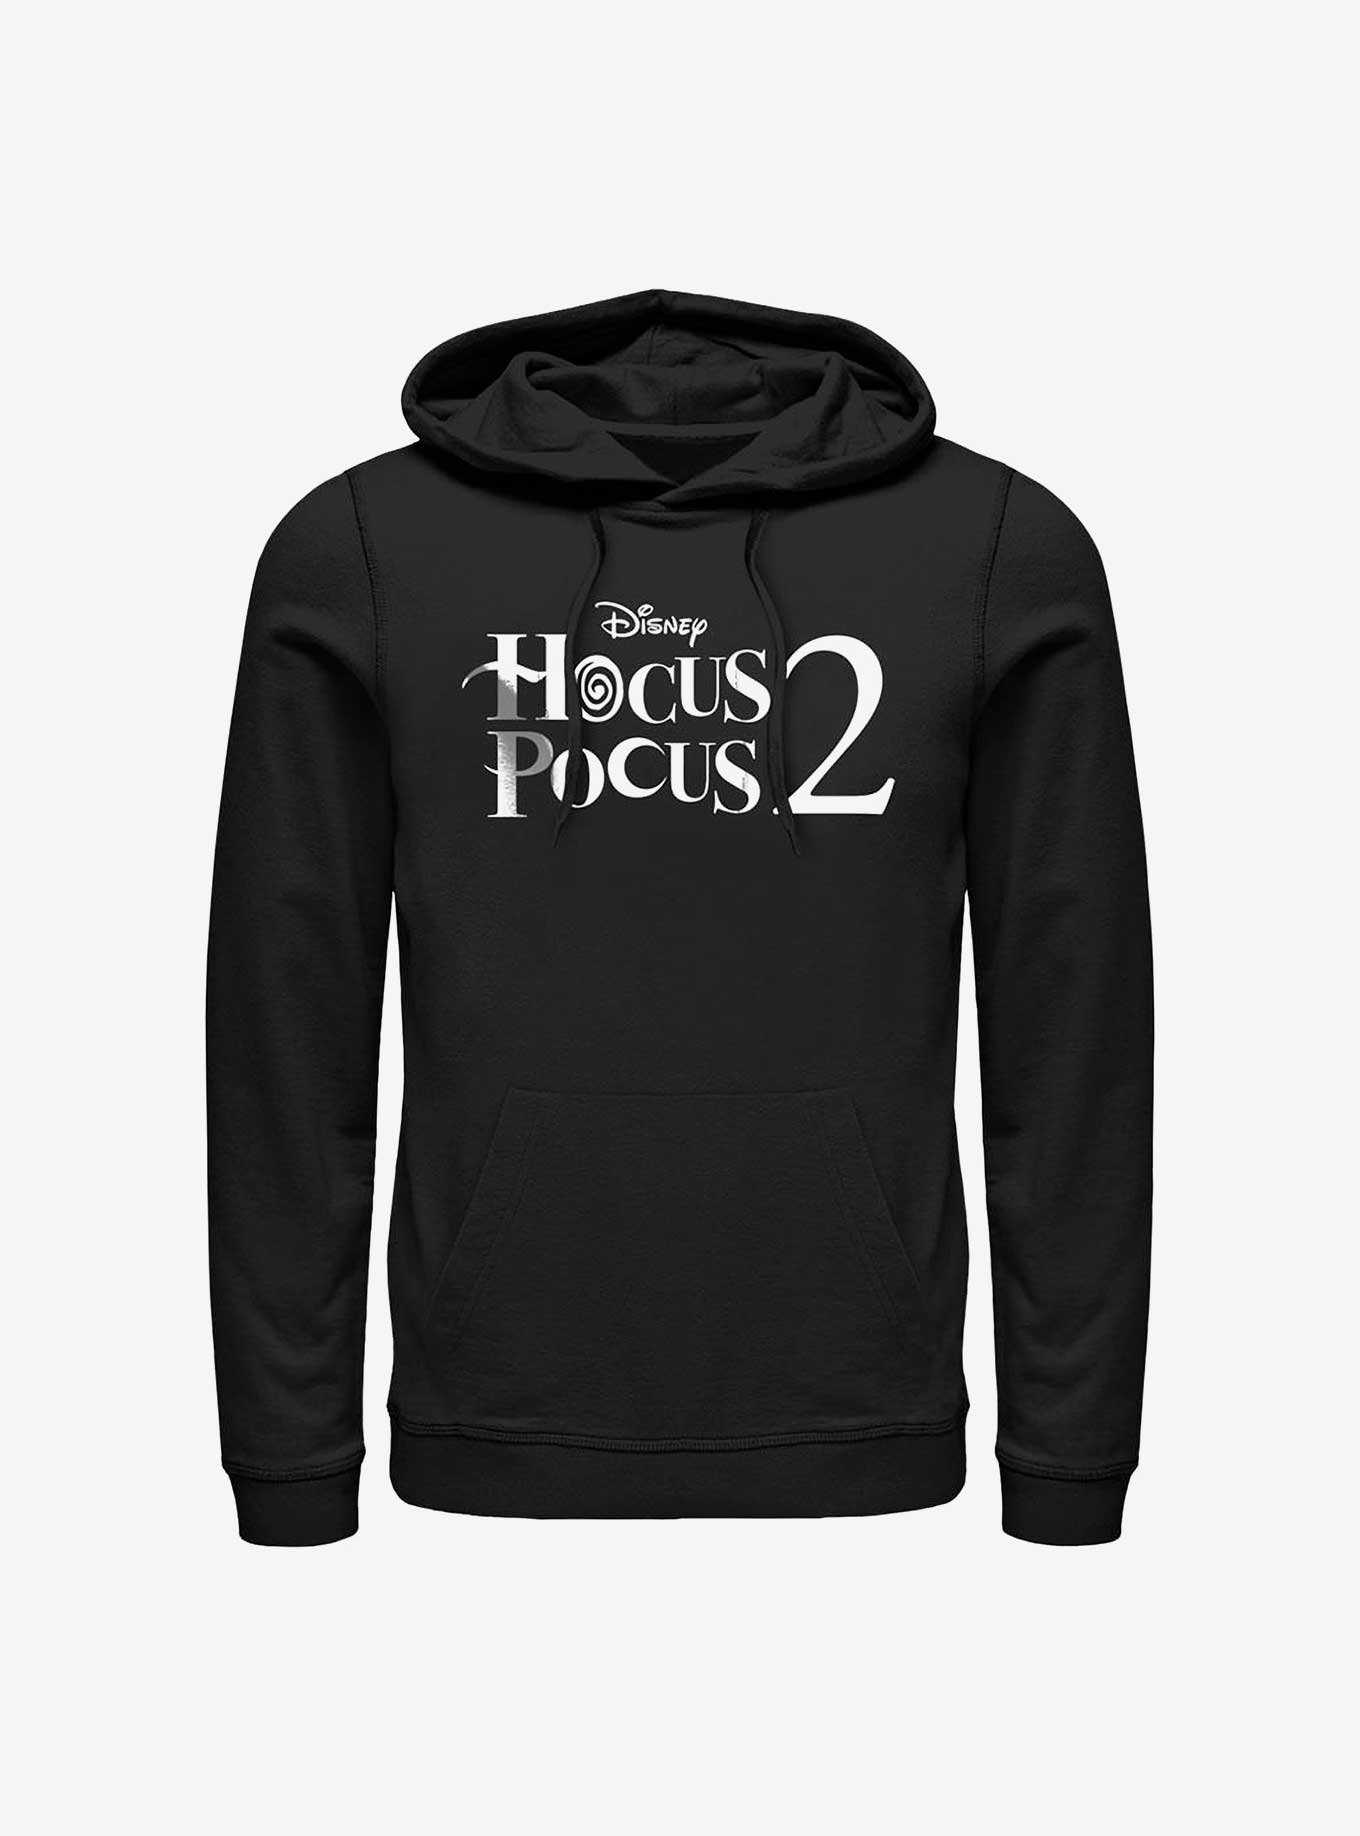 Hocus Pocus hoodie and sweatpants @Walmart #hocuspocusfinds #hocuspocu